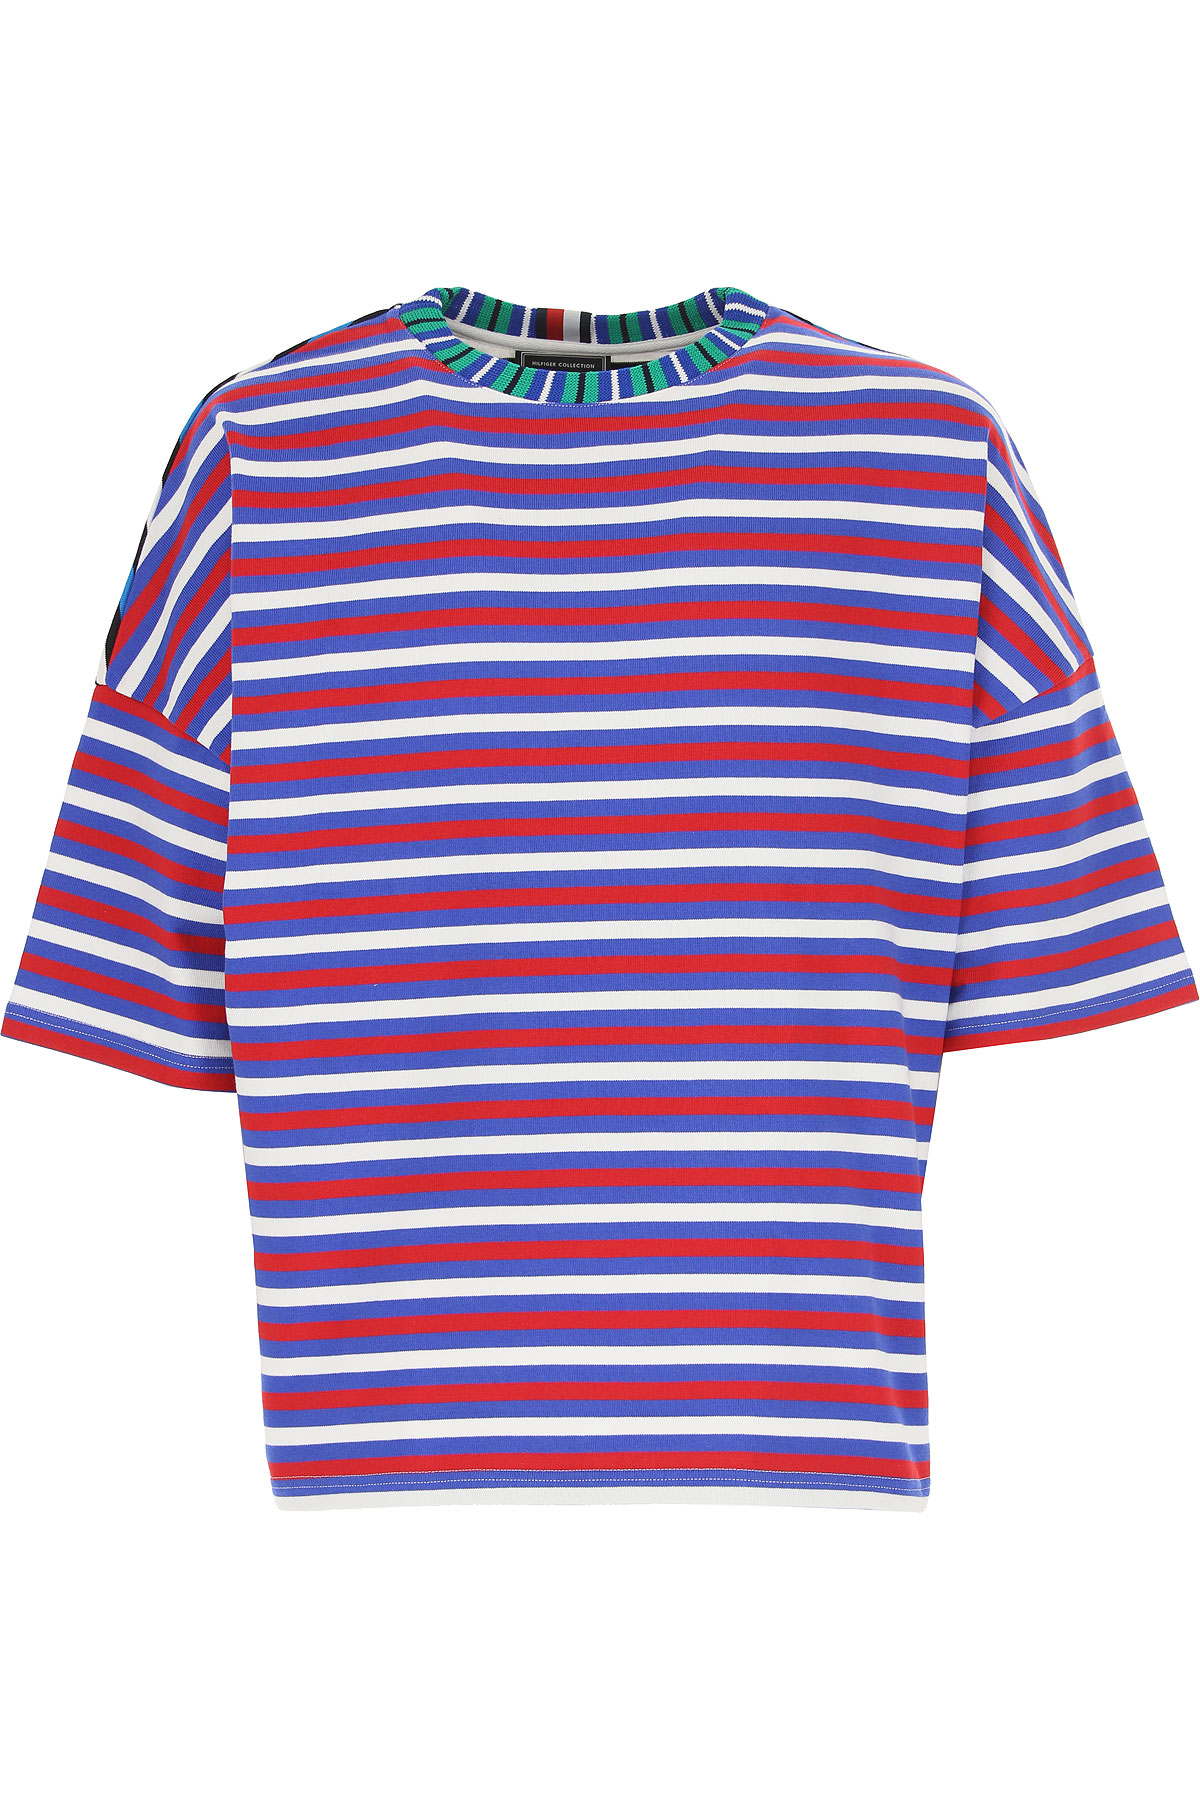 Raffaello Network for Tommy Hilfiger T-Shirt for Men On Sale in Outlet,  Bluette, Cotton, 2021, M S | AccuWeather Shop